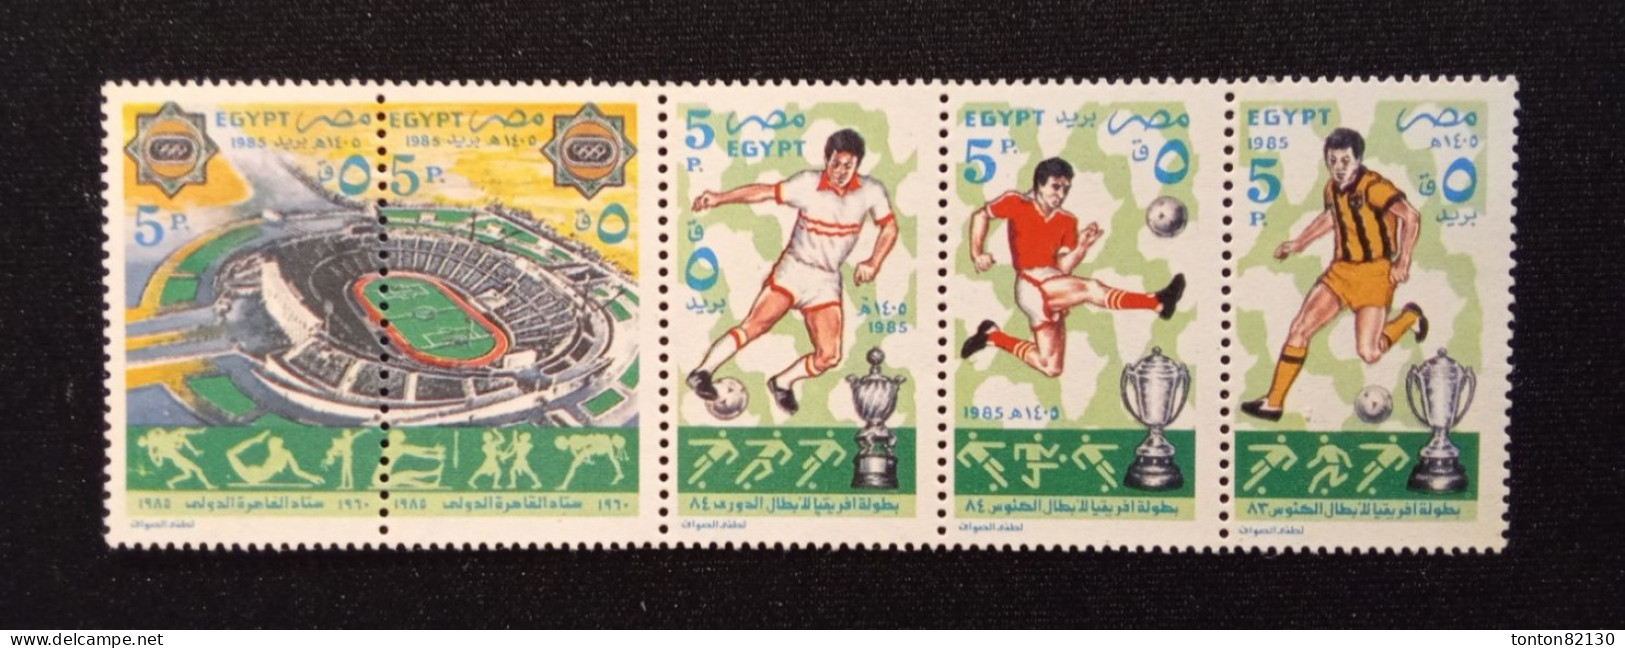 EGYPTE    N°  1274 / 78   NEUF **  GOMME  FRAICHEUR  POSTALE  TTB - Unused Stamps